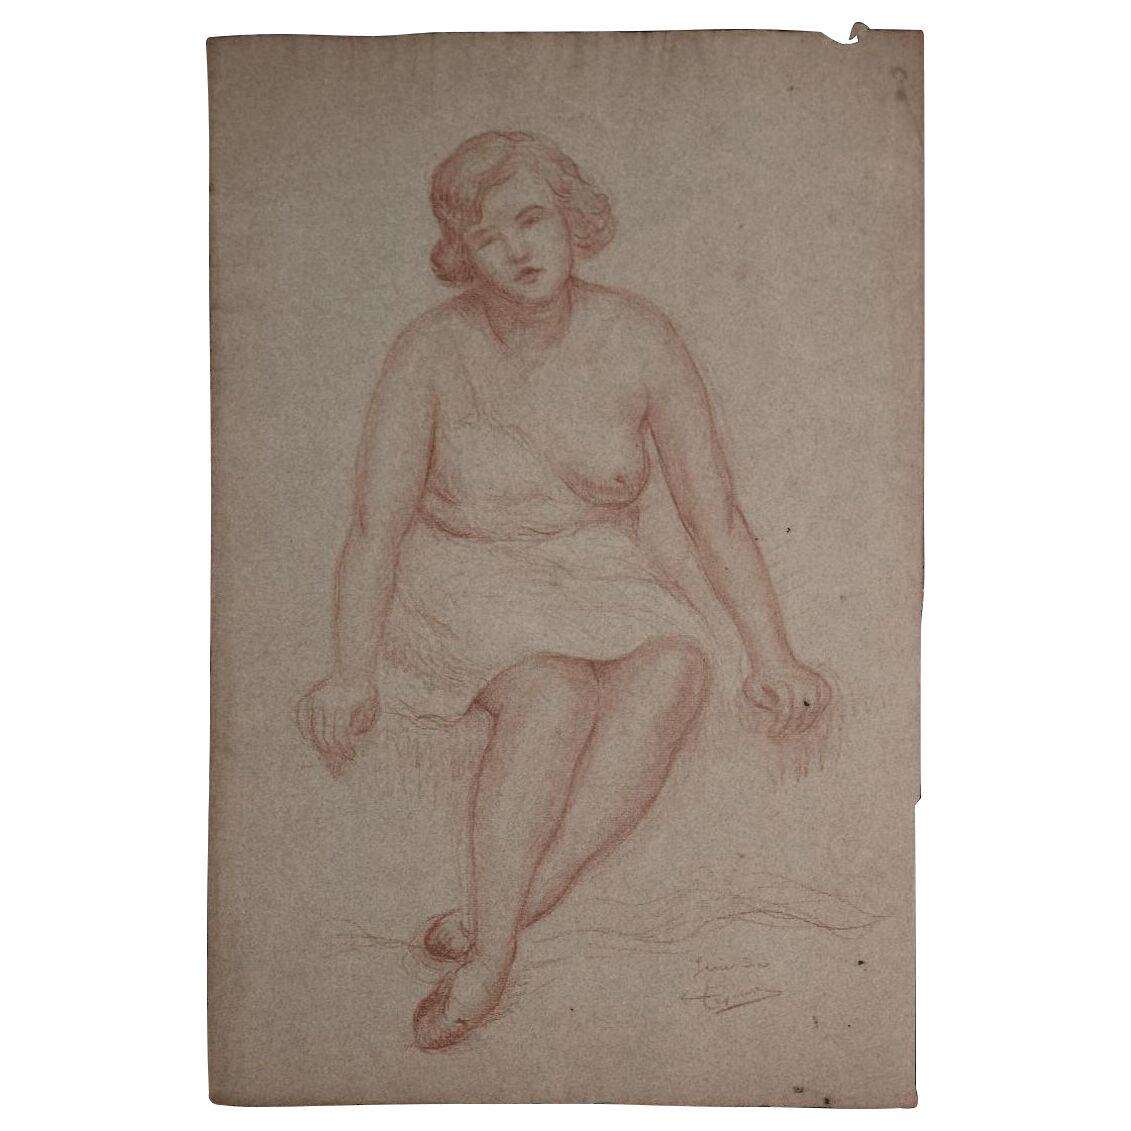 Emile Lejeune Graphite Sketch Portrait Study of a Seated Woman 1950